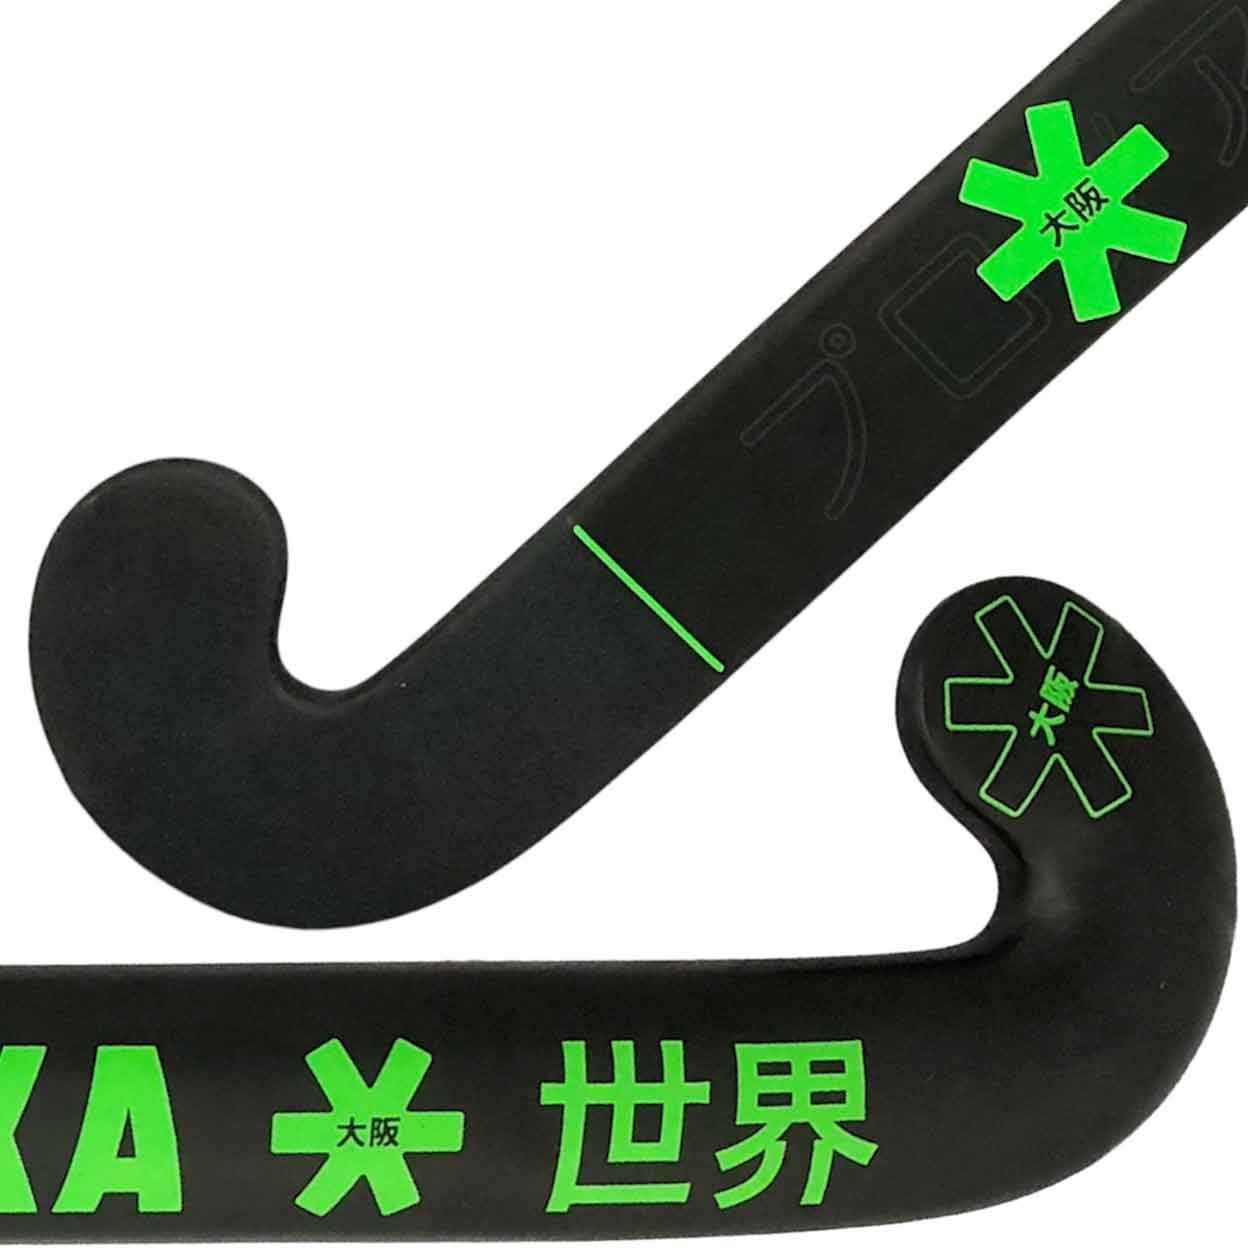 Close up of the Osaka Pro Tour 70 Pro Bow Composite Field Hockey Stick